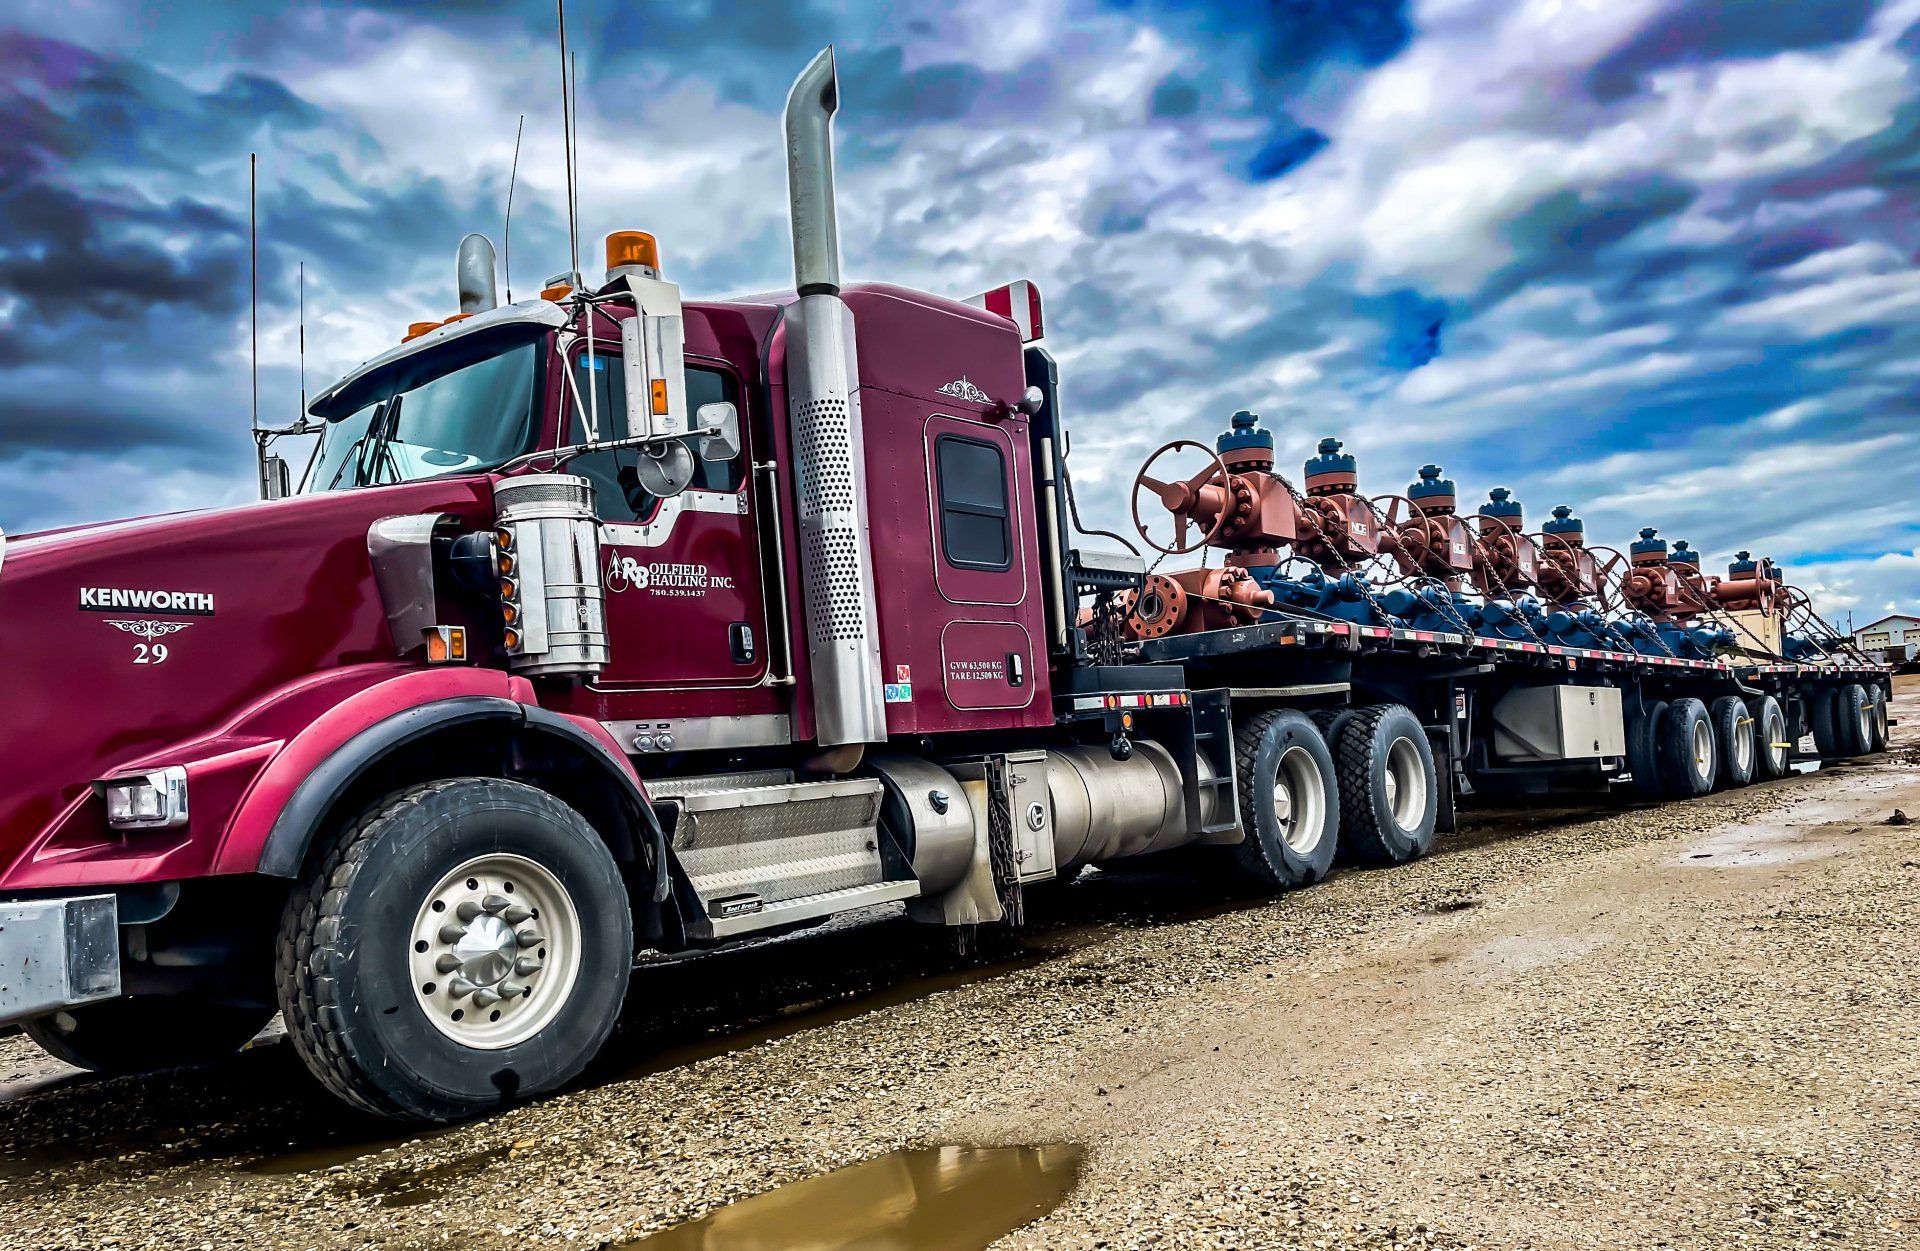 Winch tractor and super b trailers hauling well heads in Grande Prairie, Alberta